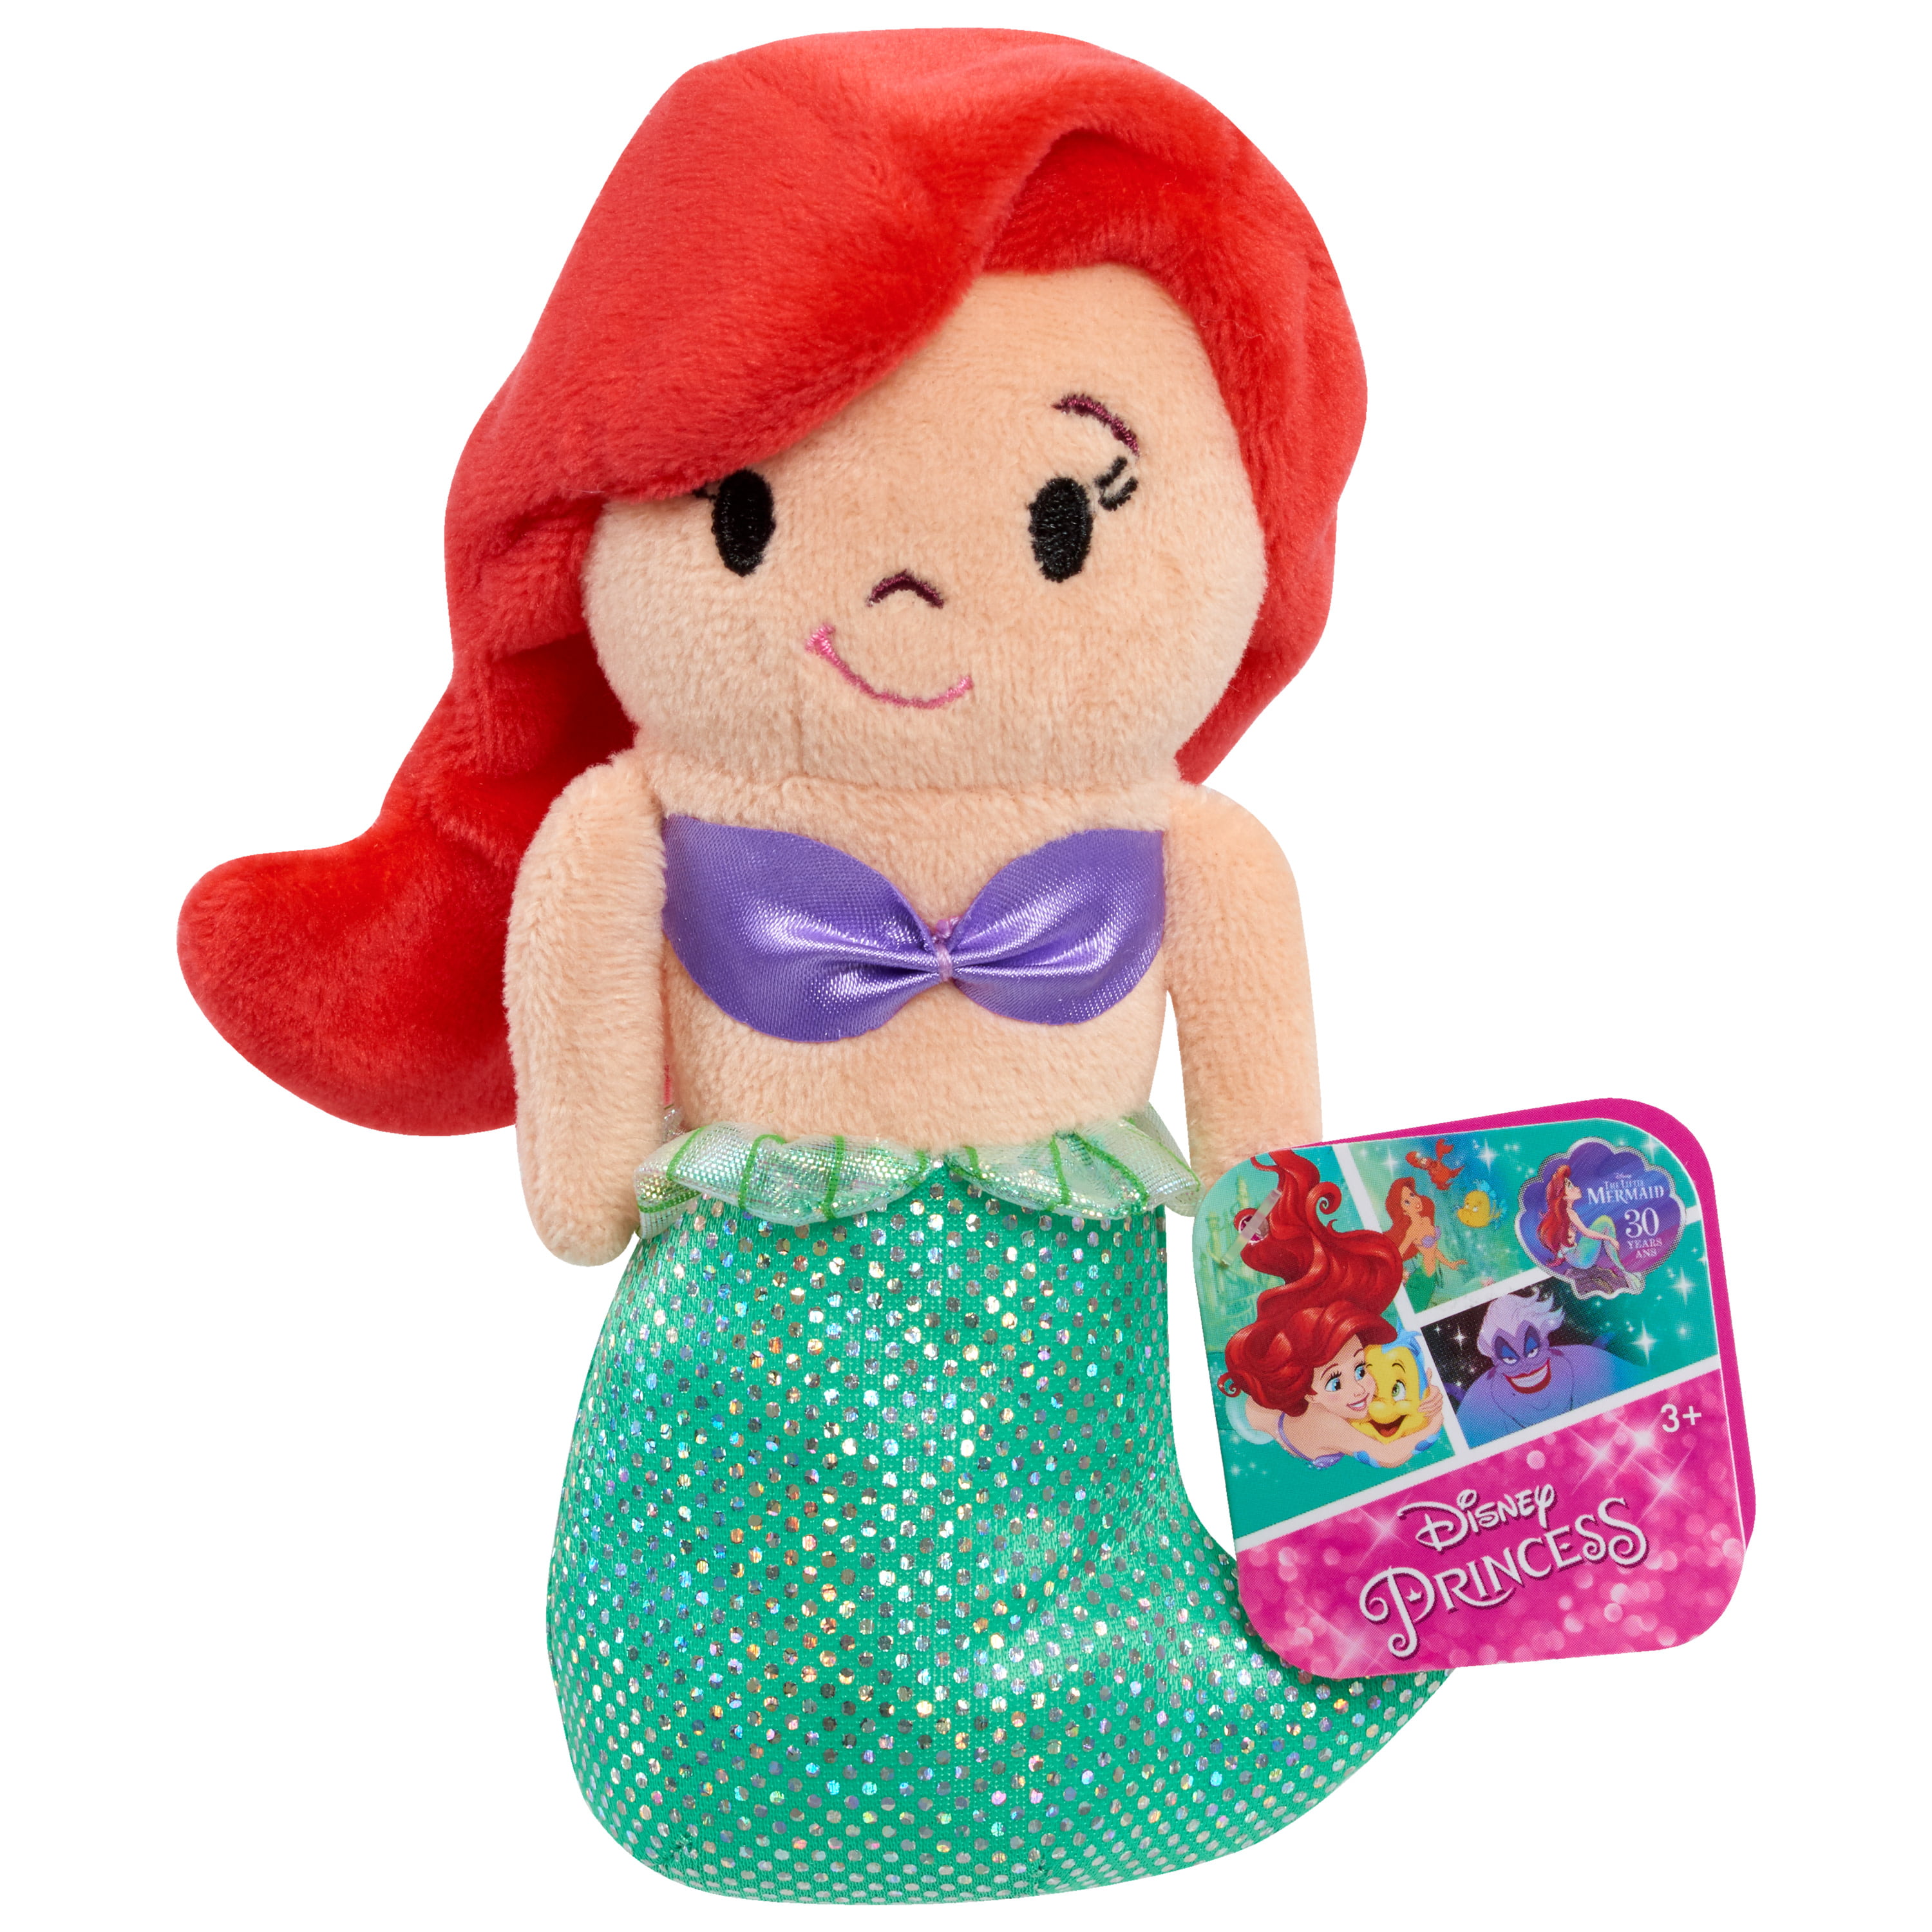 Disney Princess Ariel The Little Mermaid Stylized 5-inch Bean Plush Doll for sale online